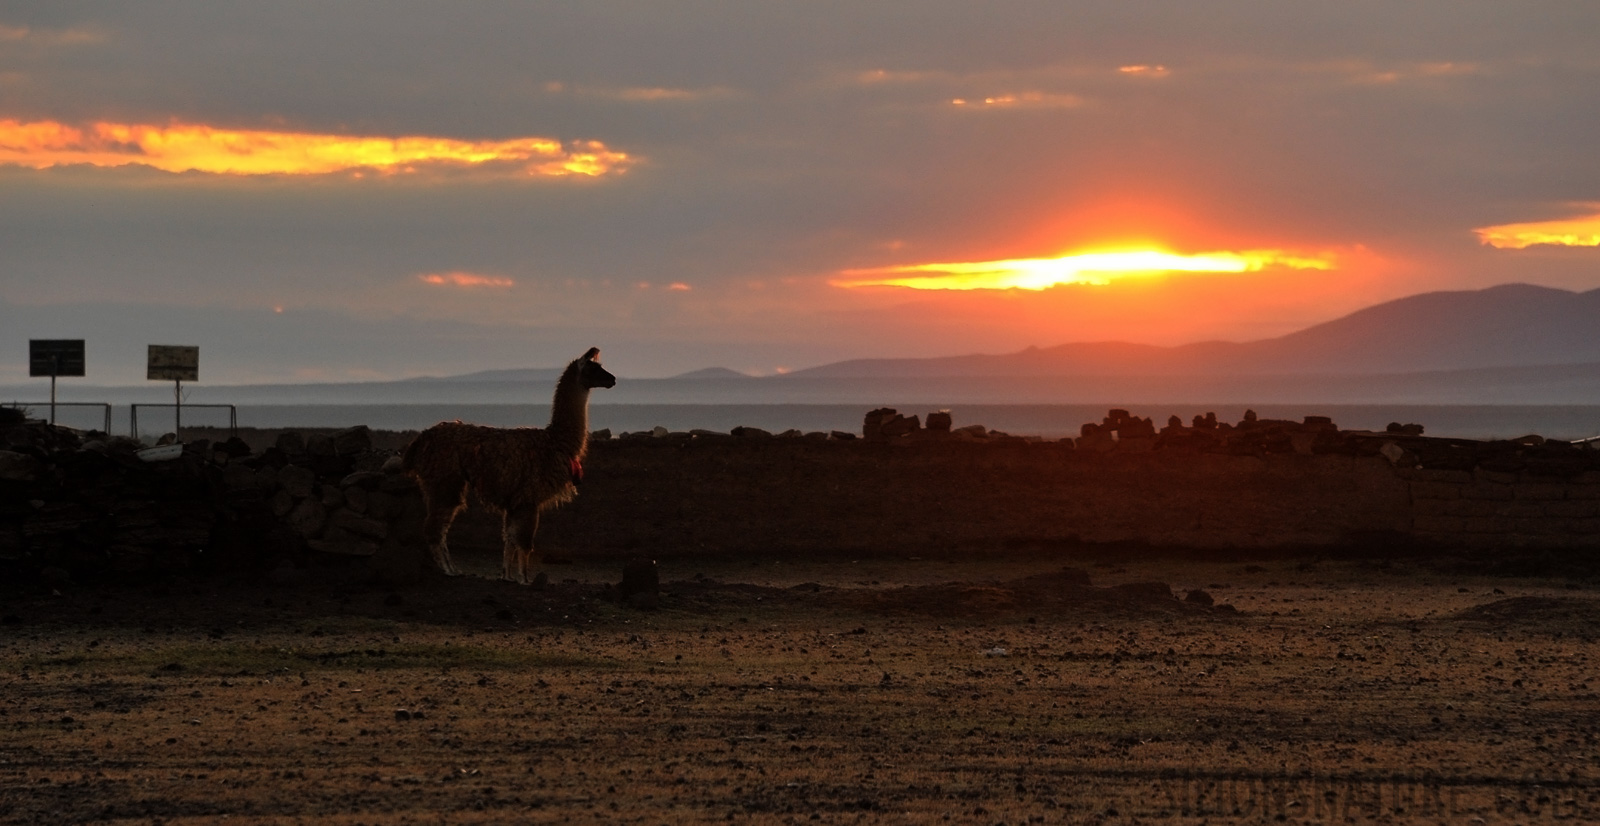 A Lama greets the sun [300 mm, 1/250 sec at f / 10, ISO 1600]